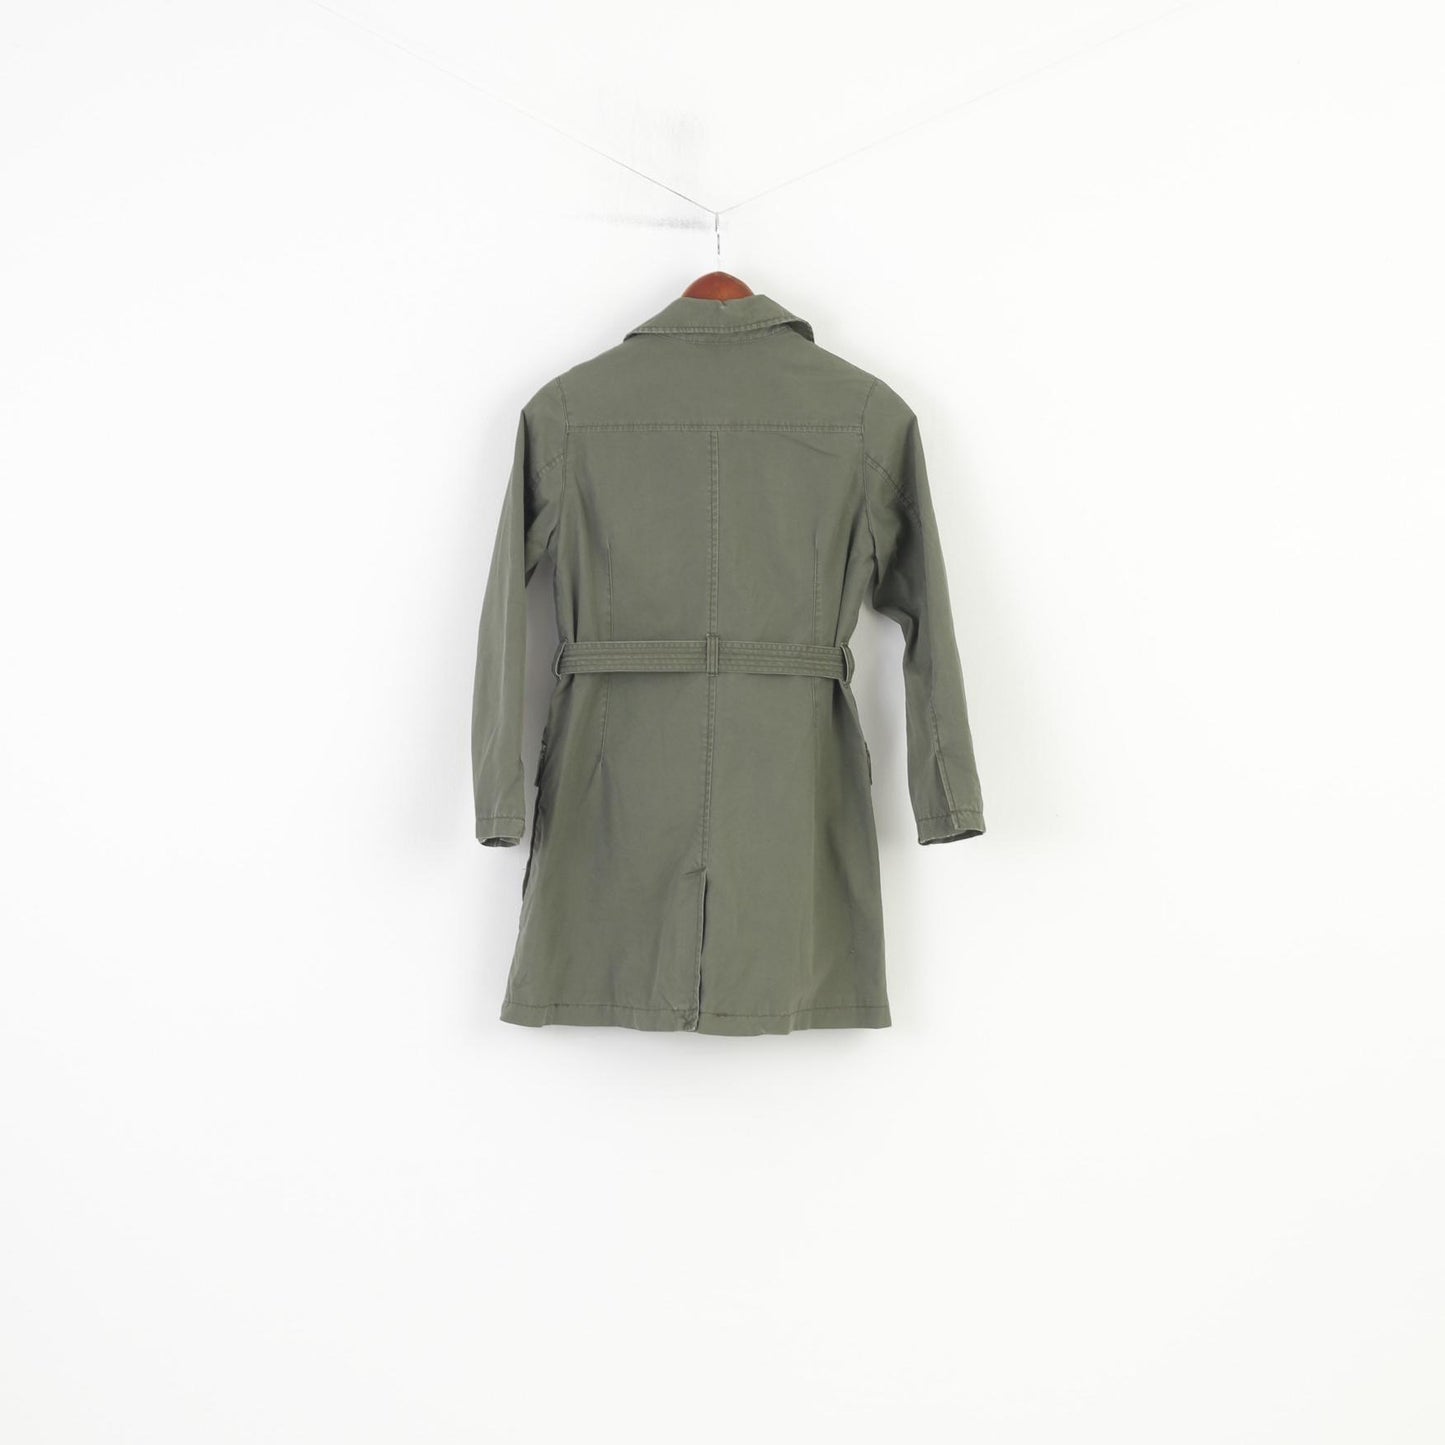 H&M Girls 152 cm 11 Age Coat Green Cotton Single Breasted Belt Pockets Collar Vintage Jacket